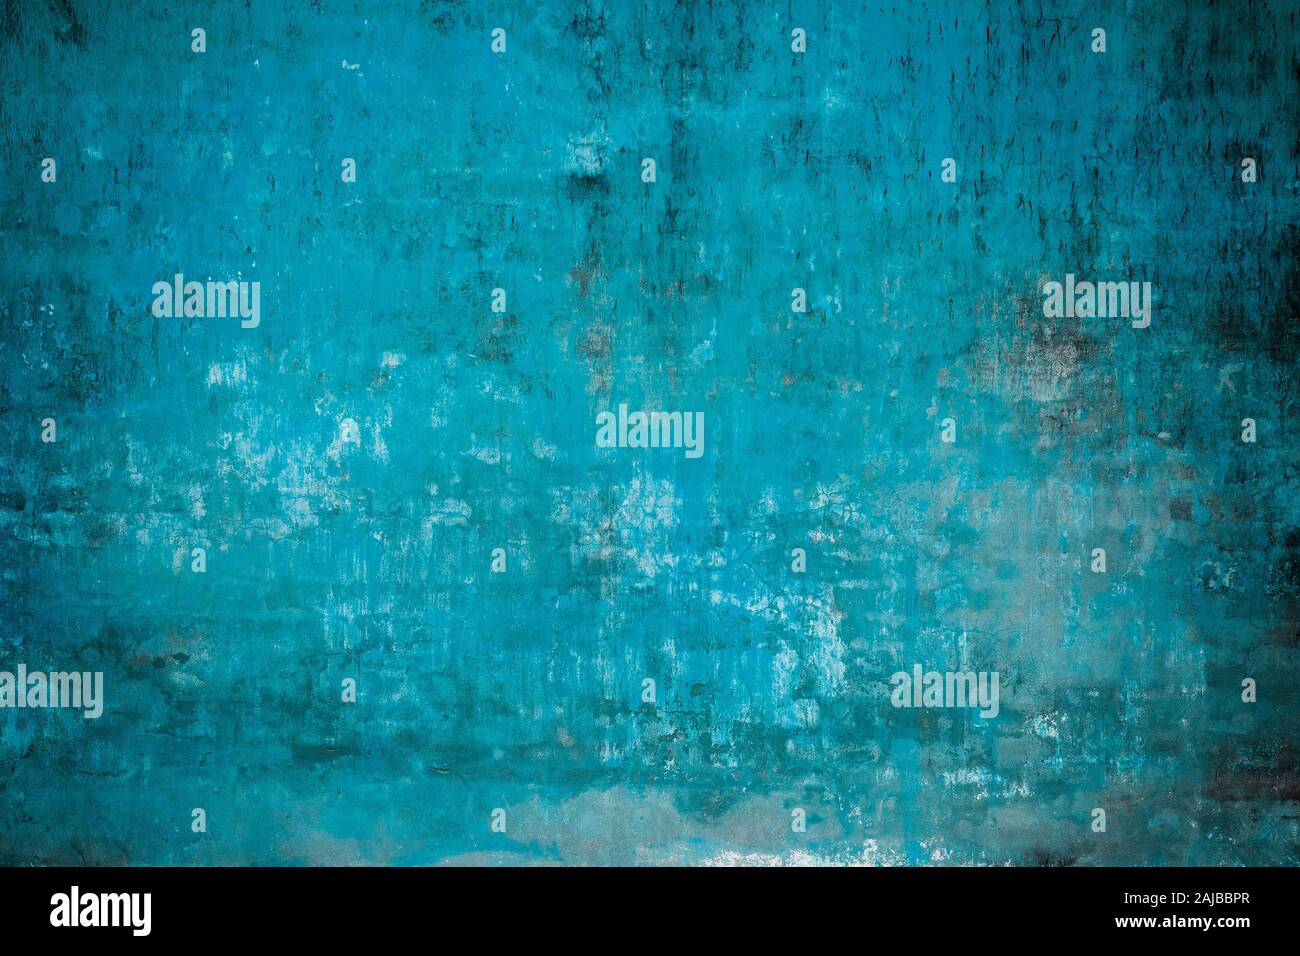 Du vrai wall background, bleu clair, grunge texture. Banque D'Images